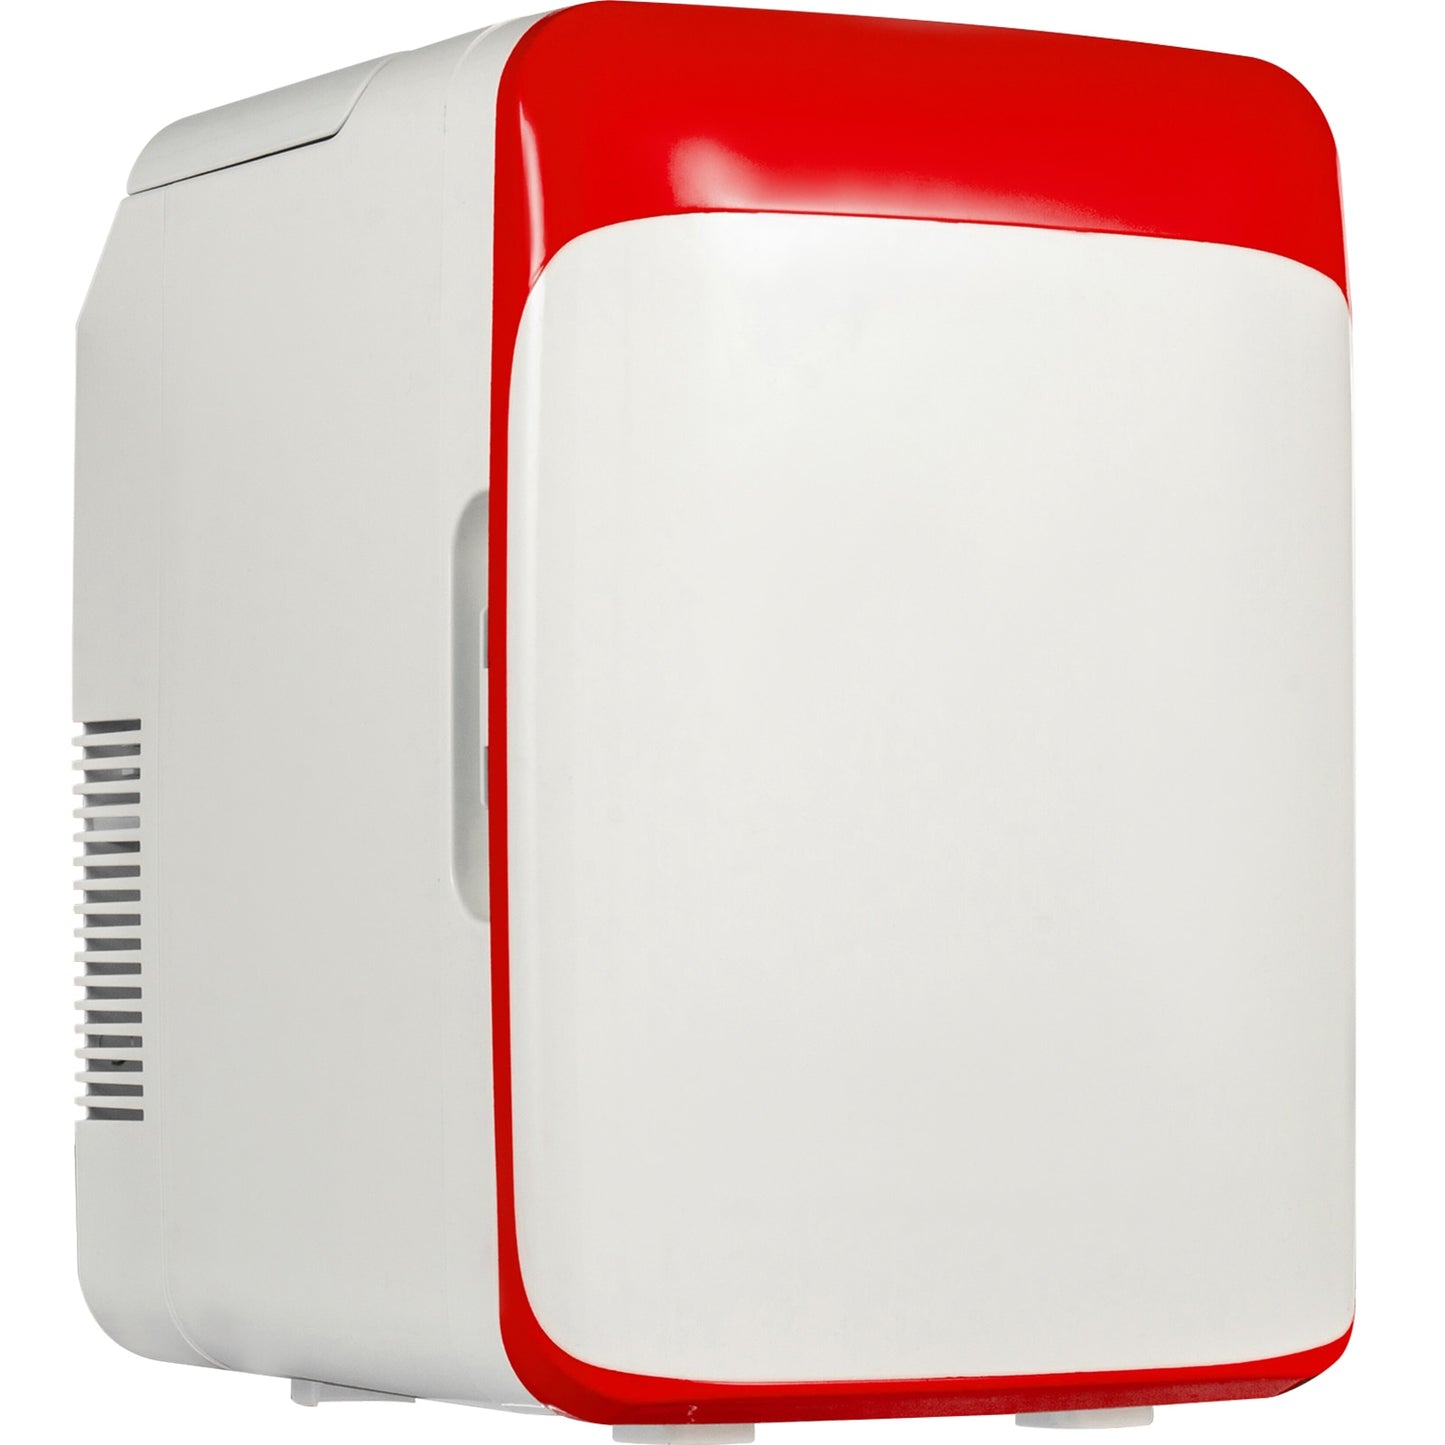 VEVOR 10L Mini Fridge Car Refrigerator Portable Freezer Cooler and Warmer Storing Skincare Cosmetic Food Drink for Home Car Use